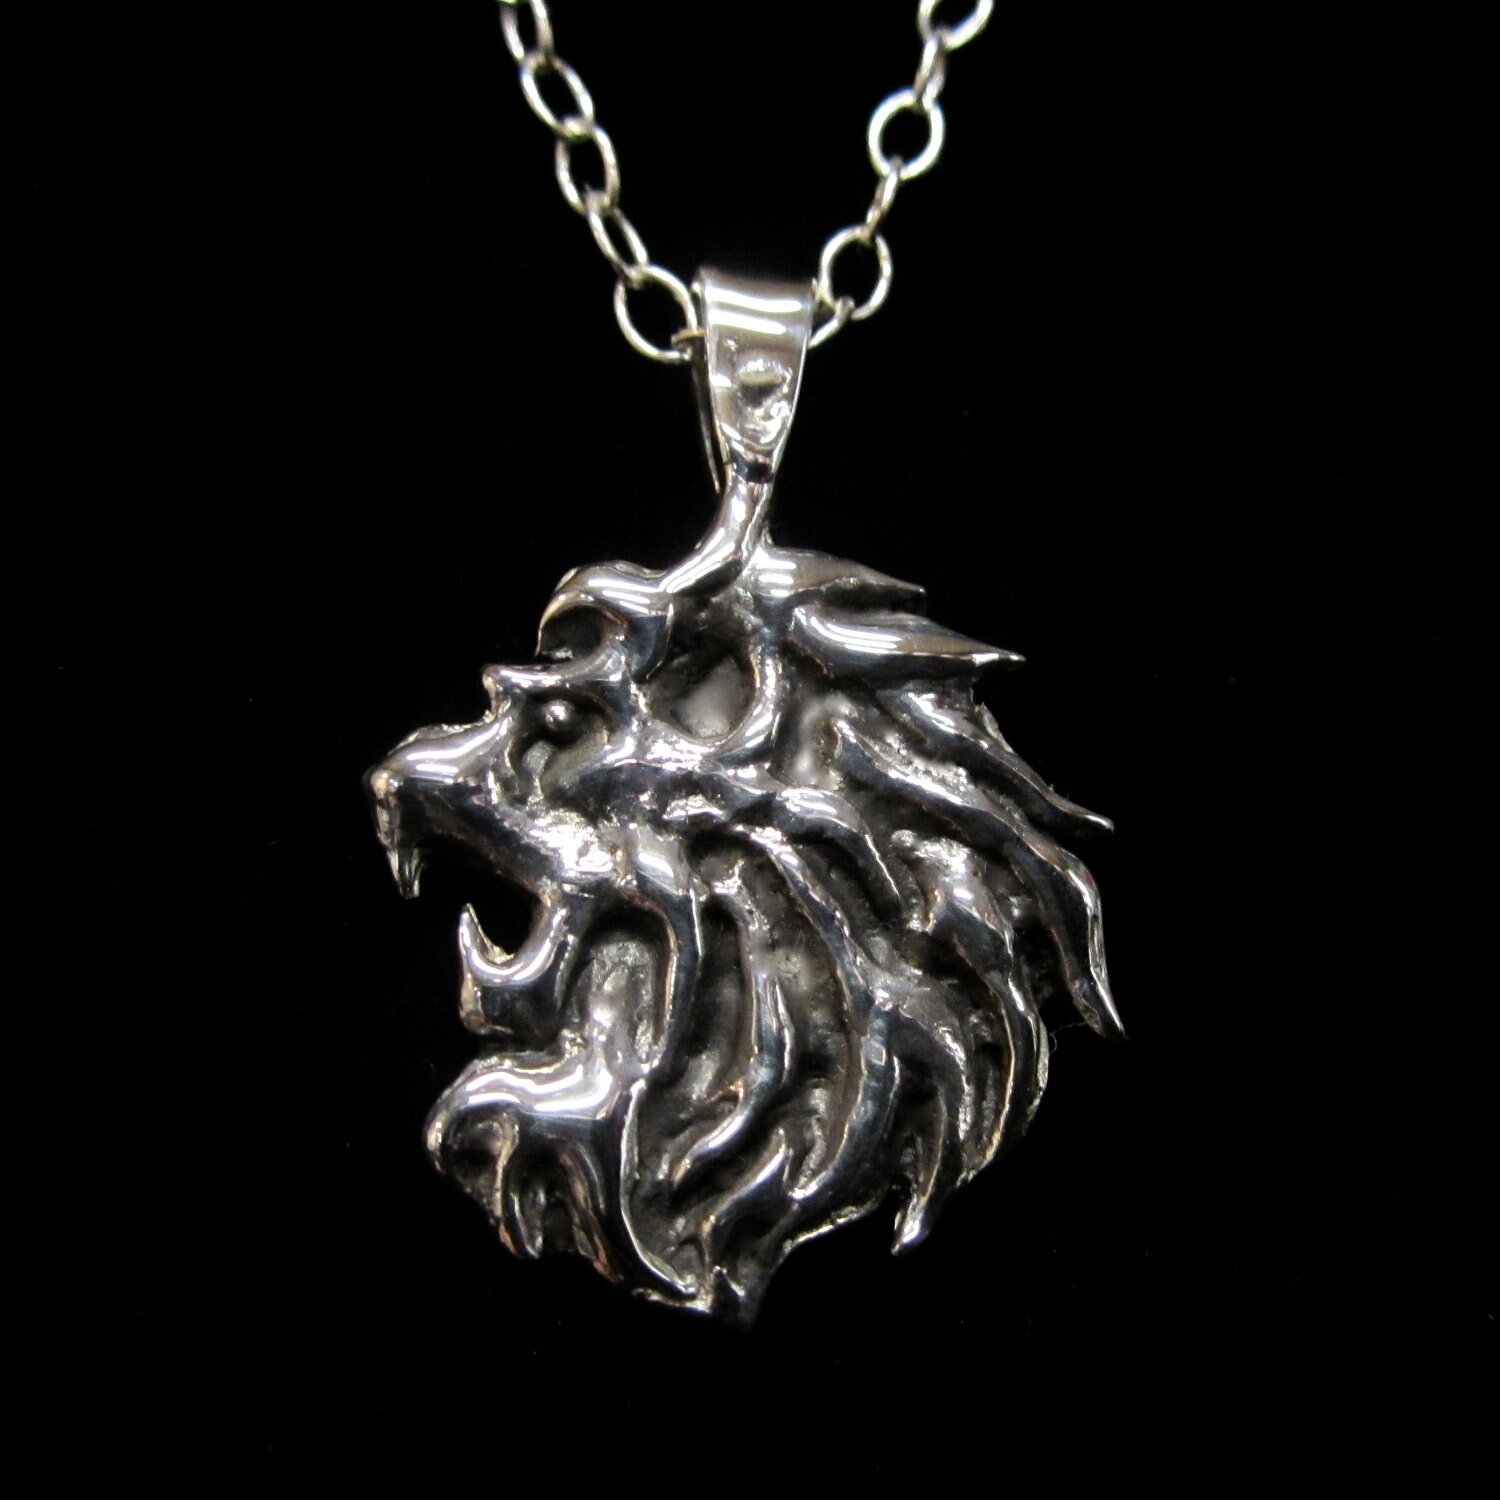 Silver Lion Pendant by TonyMack on Etsy